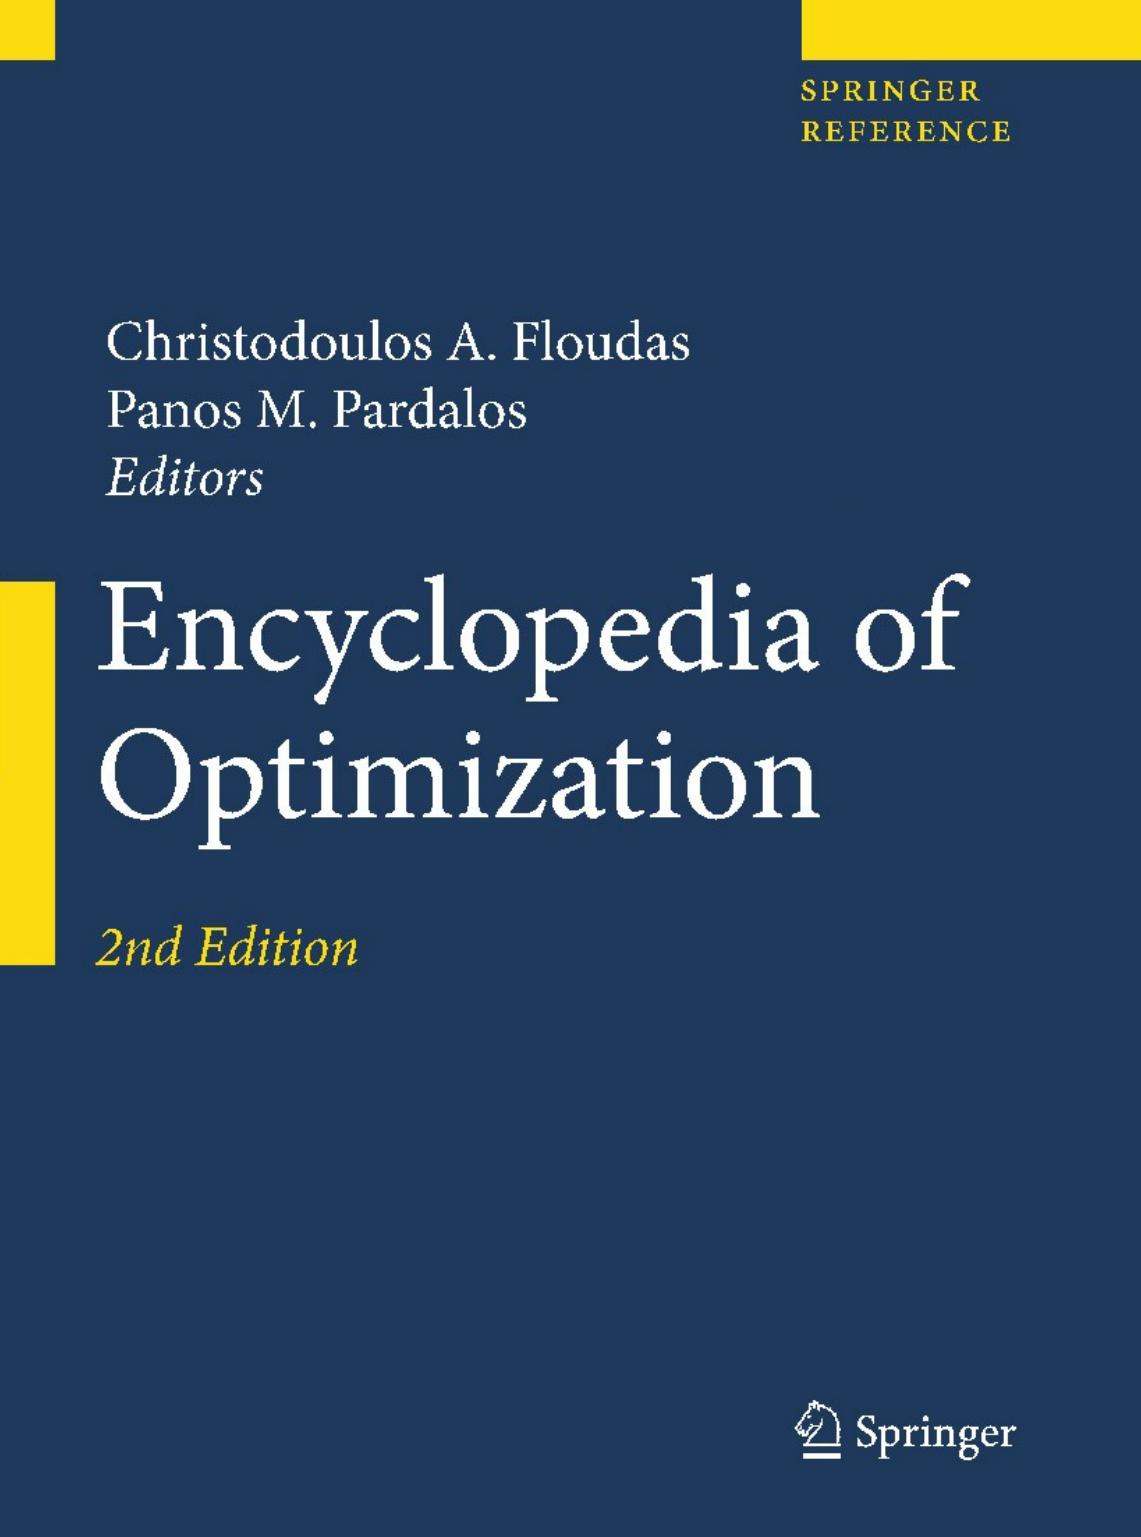 Encyclopedia of Optimization